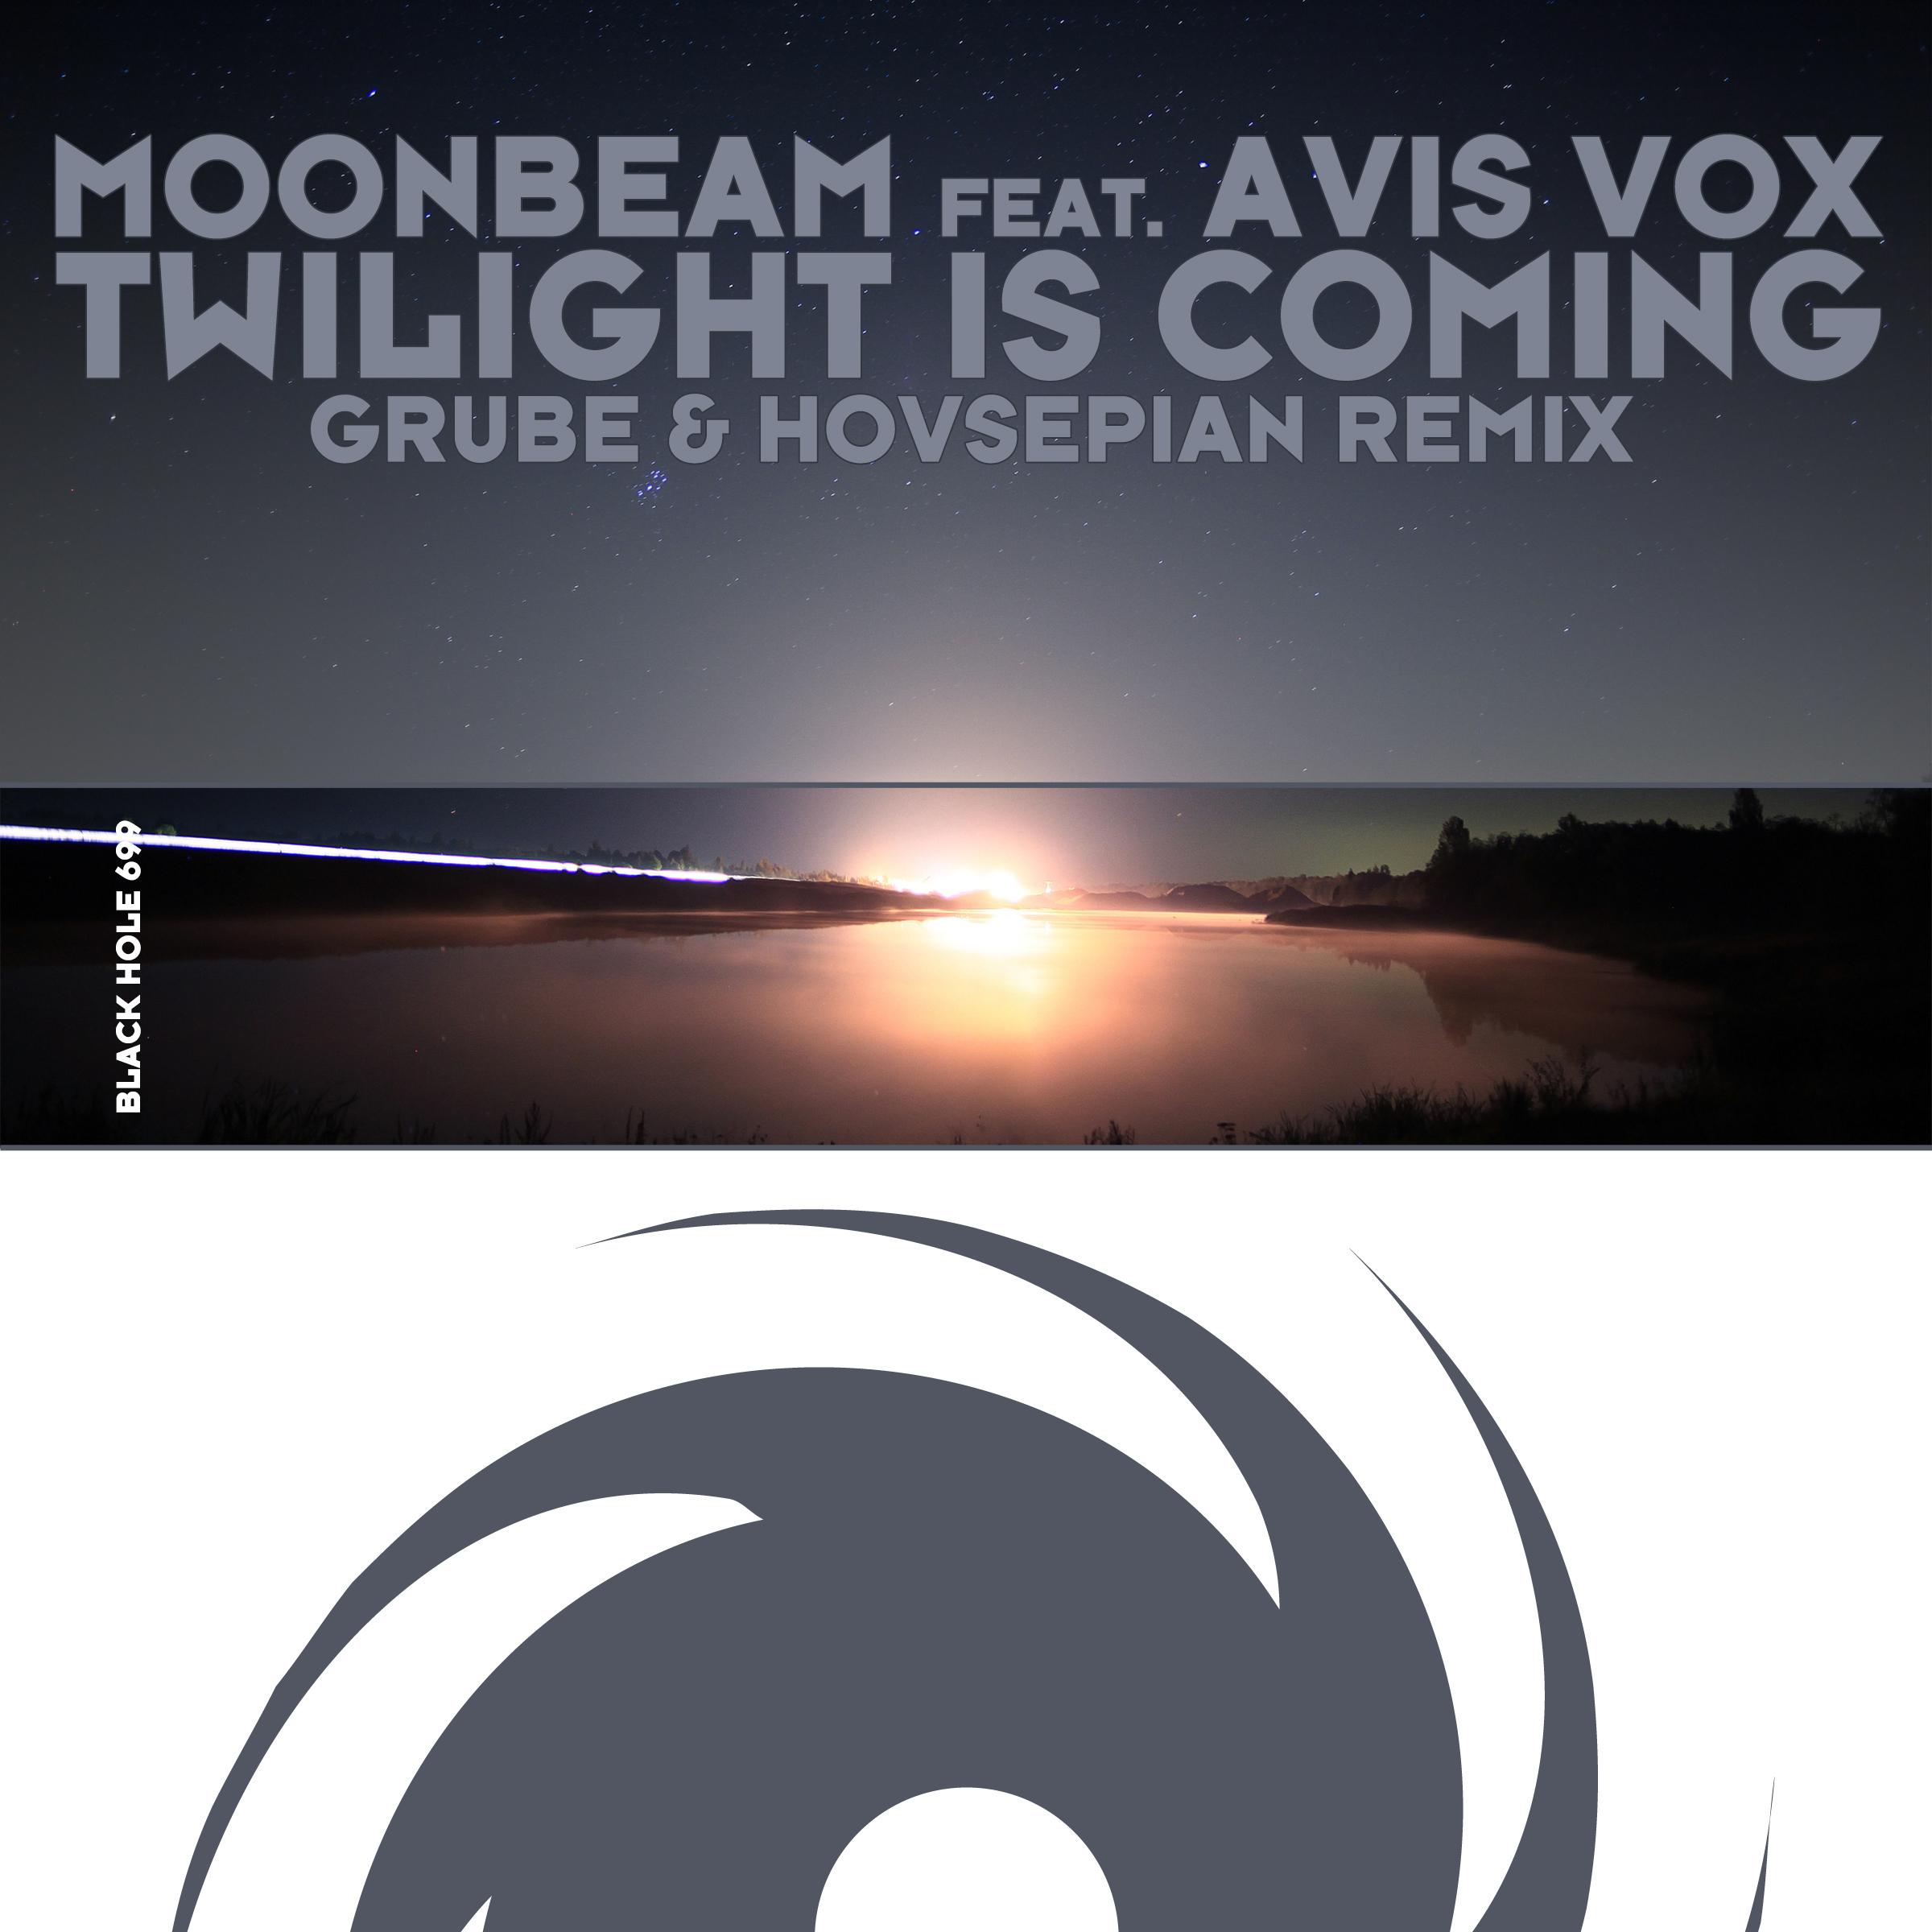 Grube & Hovsepian - Twilight is Coming (Grube & Hovsepian Remix)